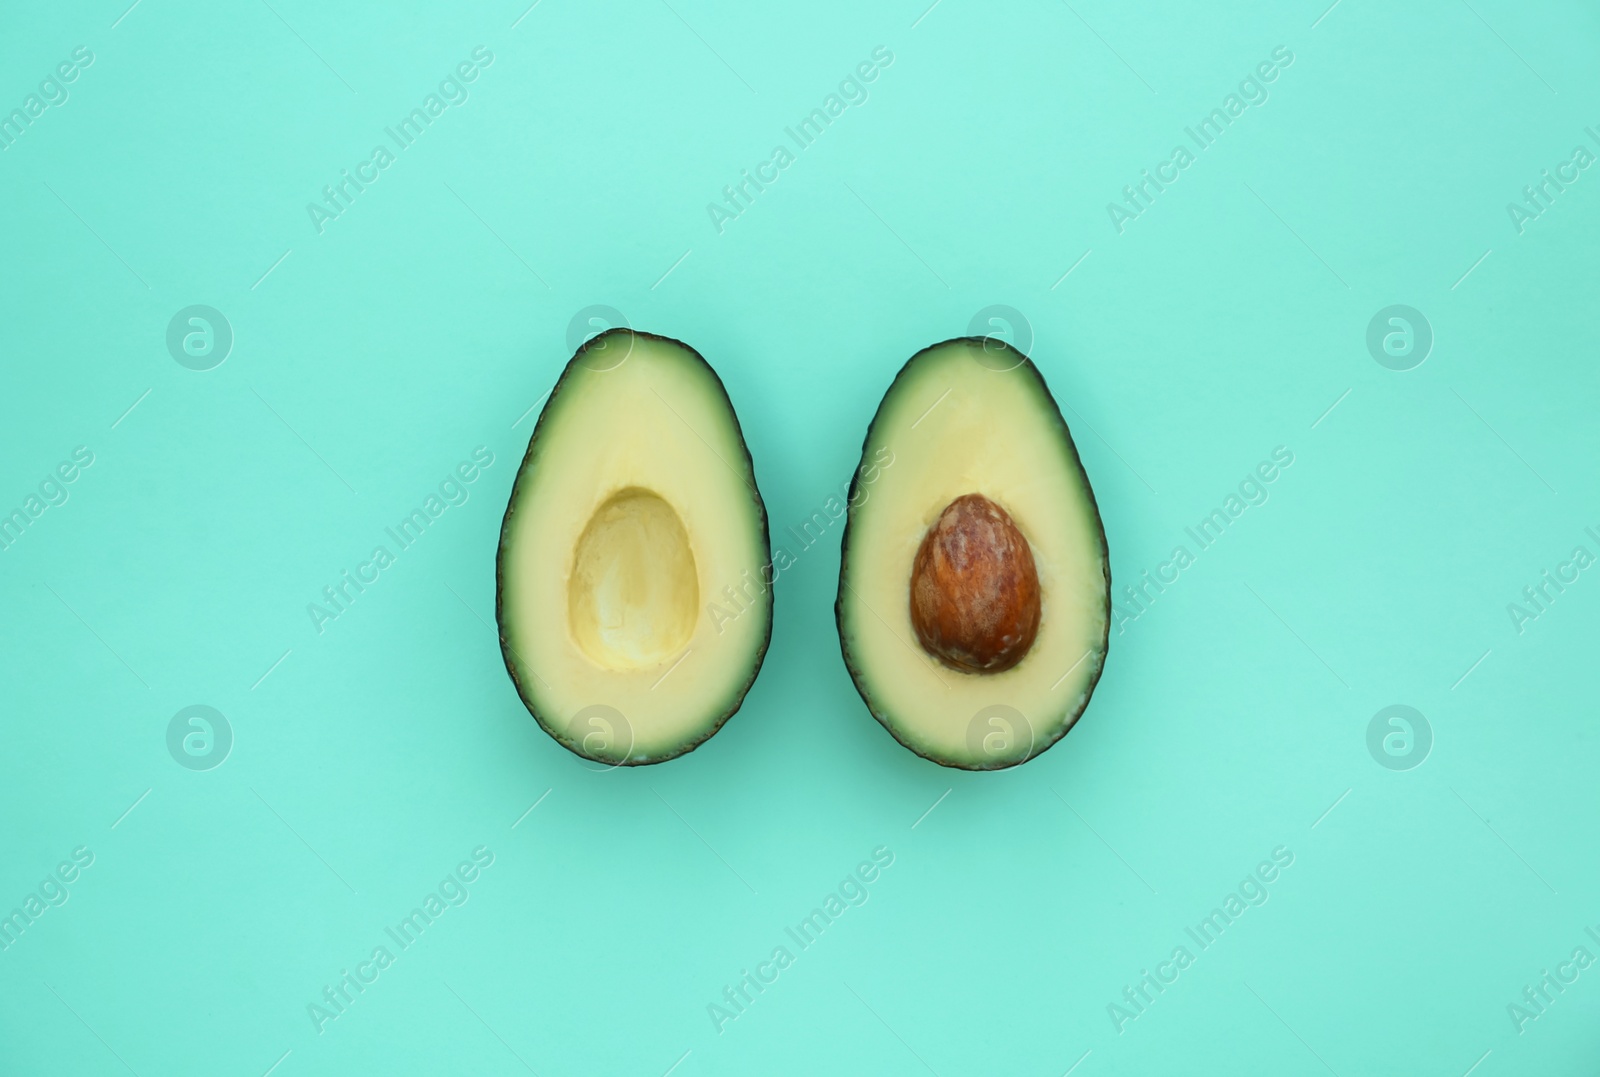 Photo of Halves of tasty fresh avocados on turquoise background, flat lay